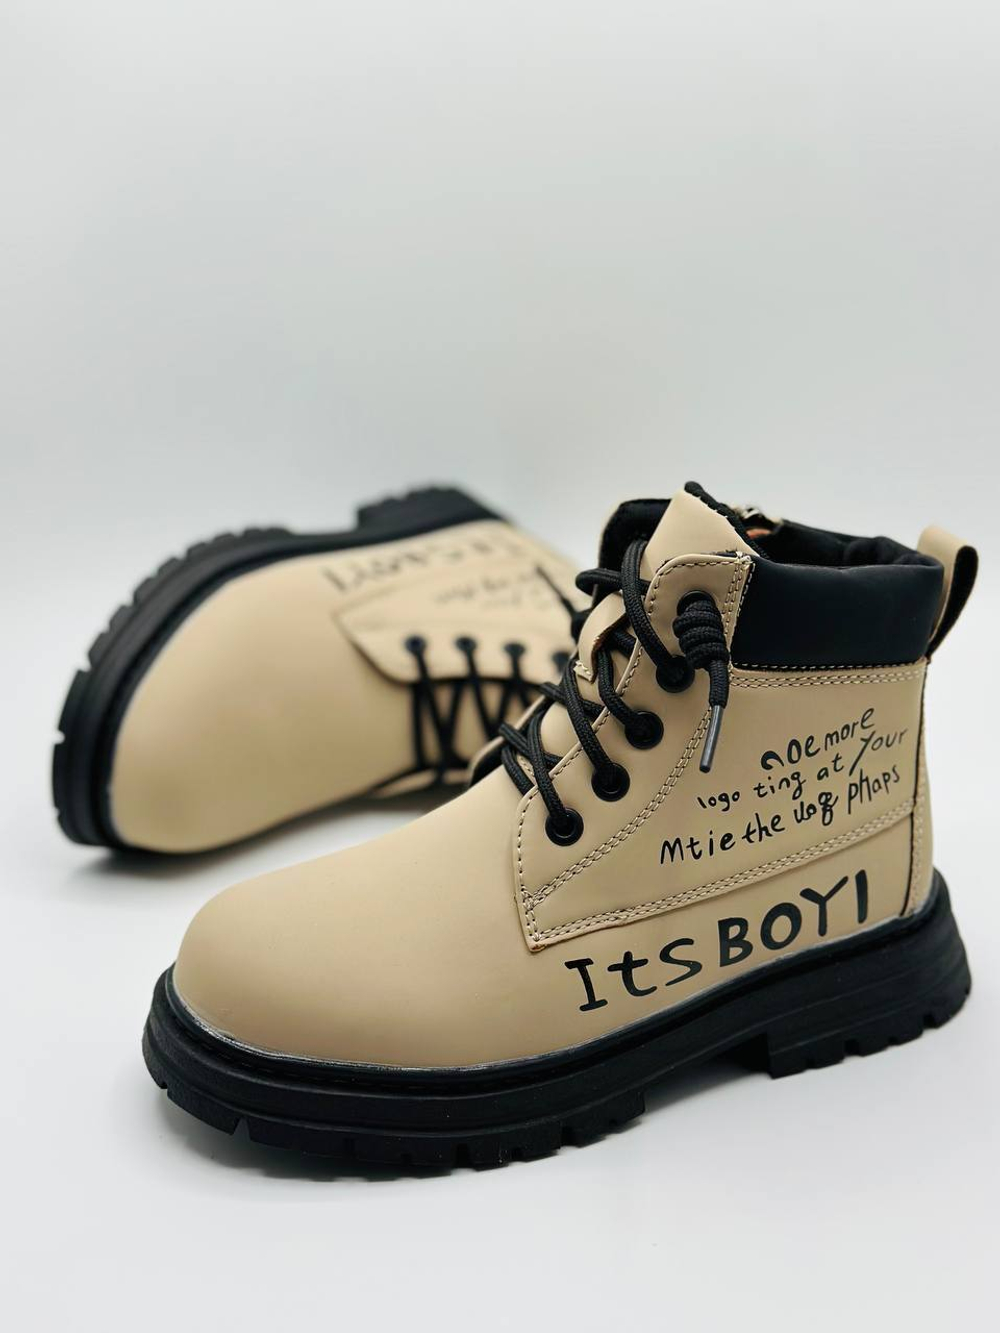 Ботинки для мальчика Buba Boy